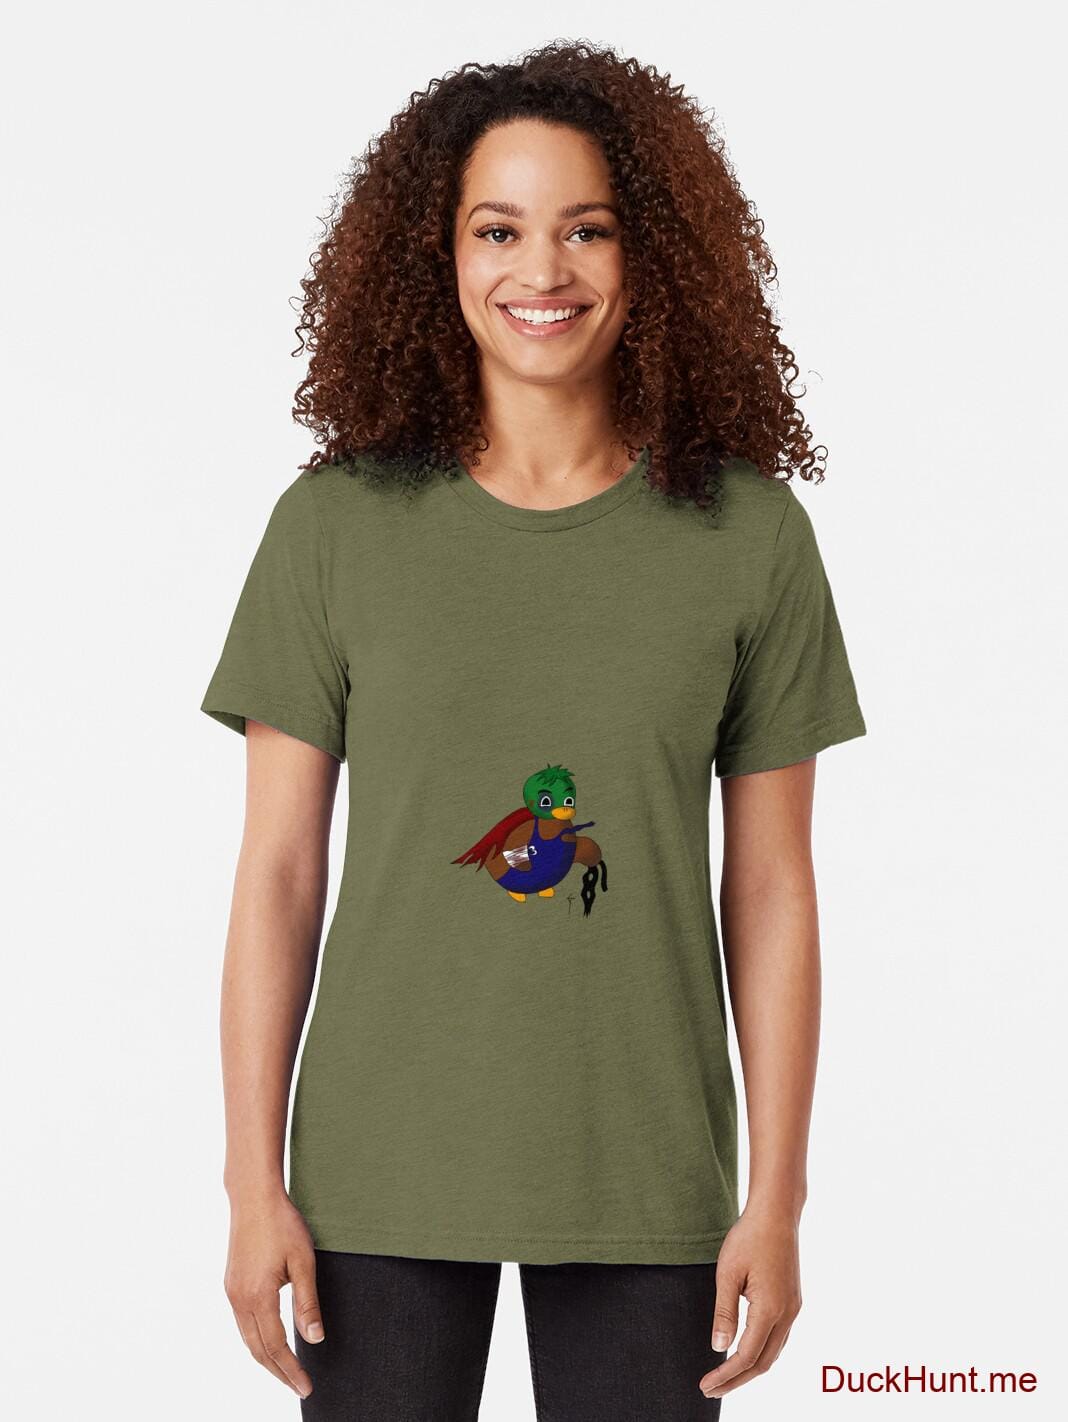 Dead DuckHunt Boss (smokeless) Green Tri-blend T-Shirt (Front printed) alternative image 1